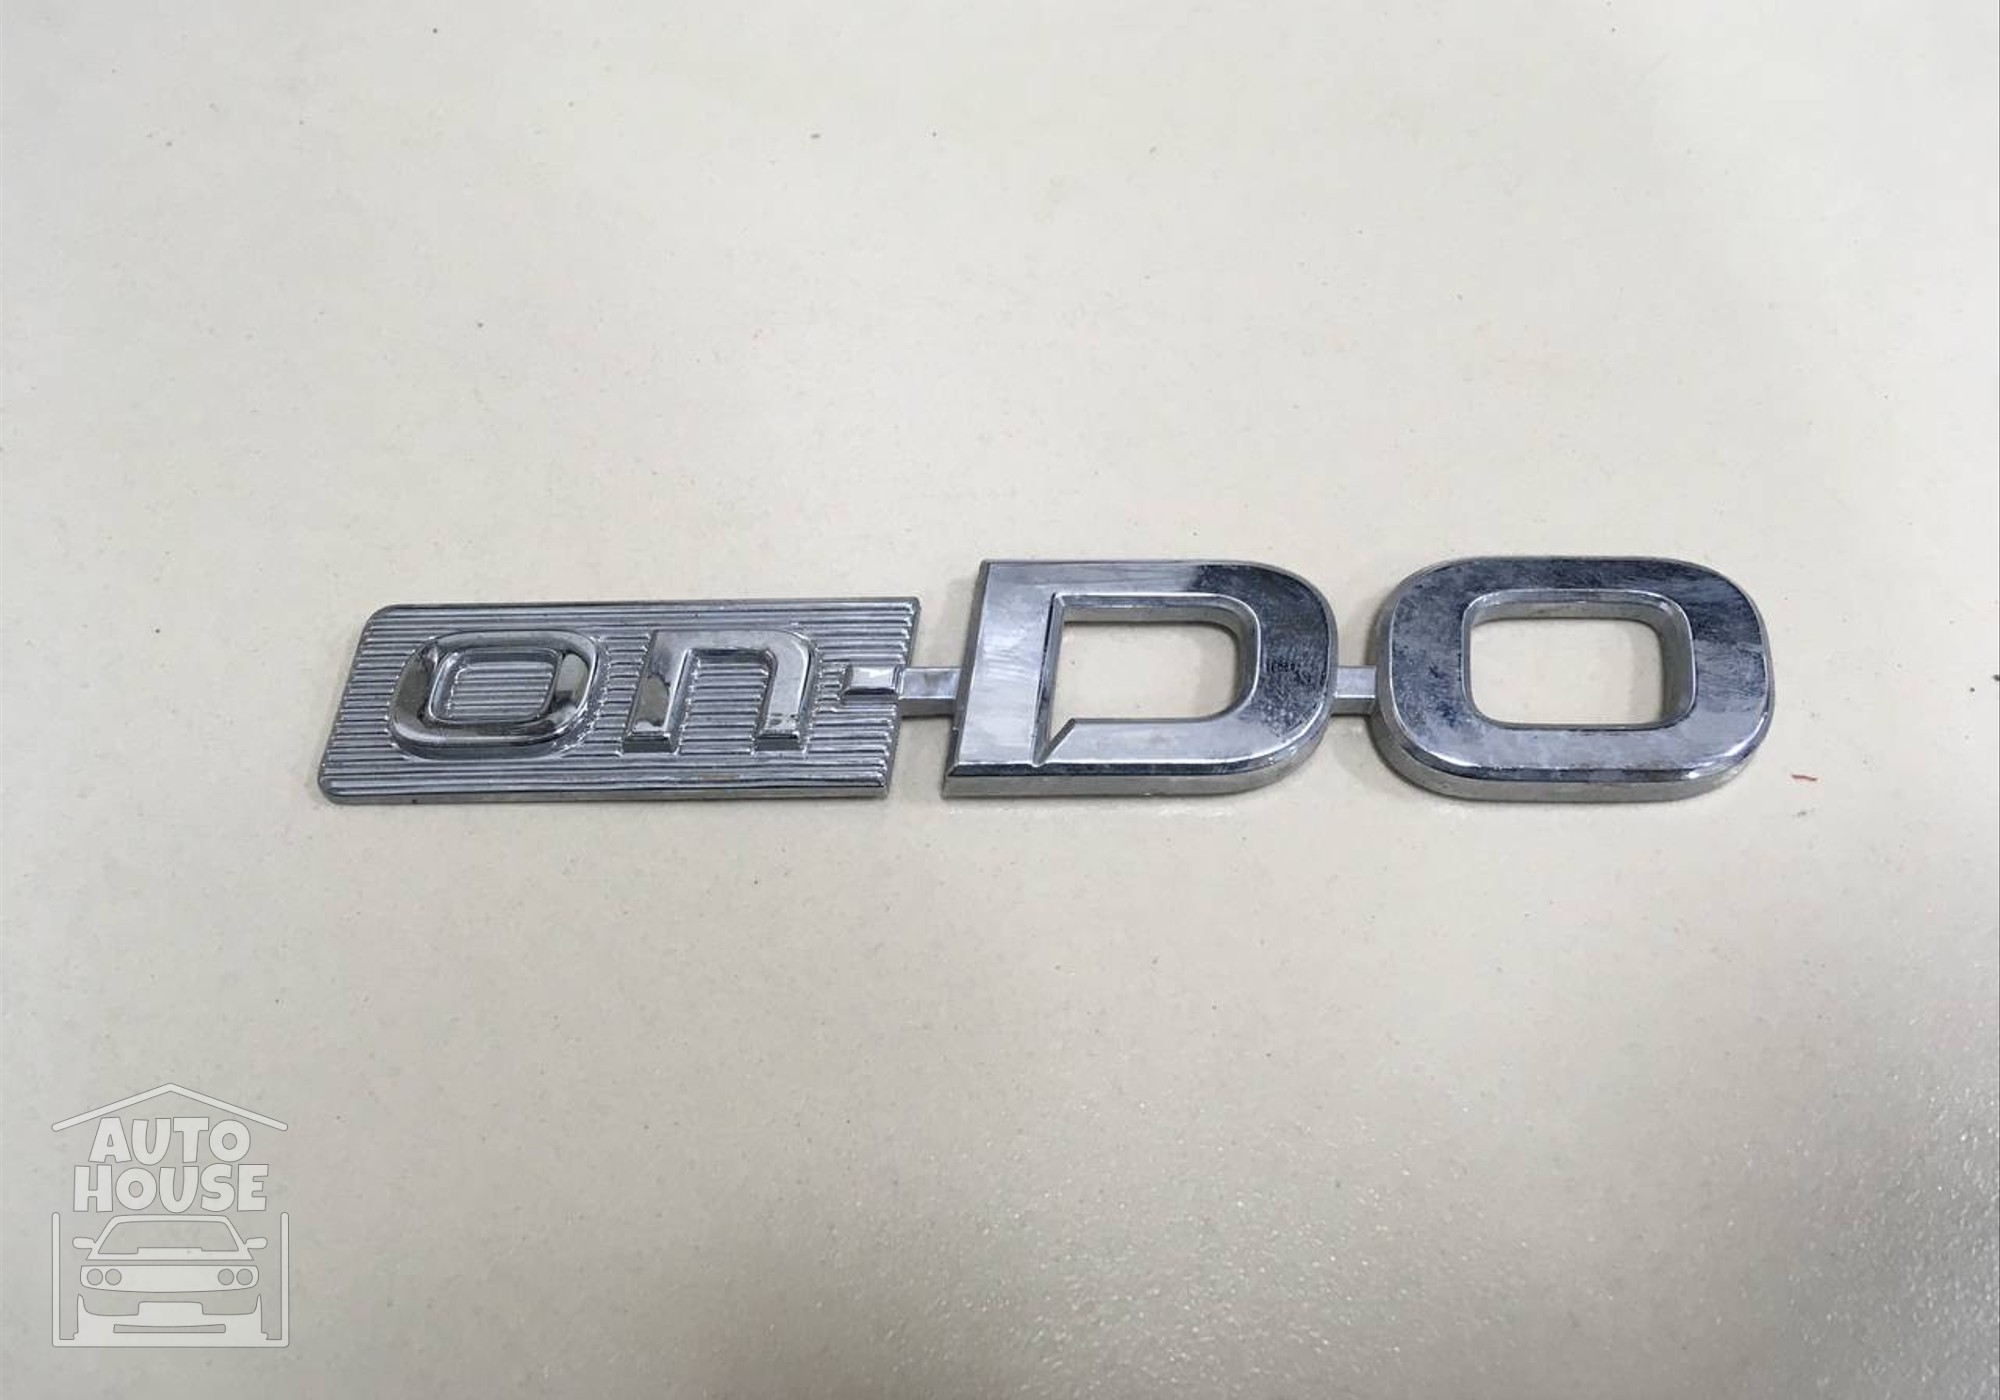 Эмблема на крышку багажника для Datsun on-Do (с 2014)